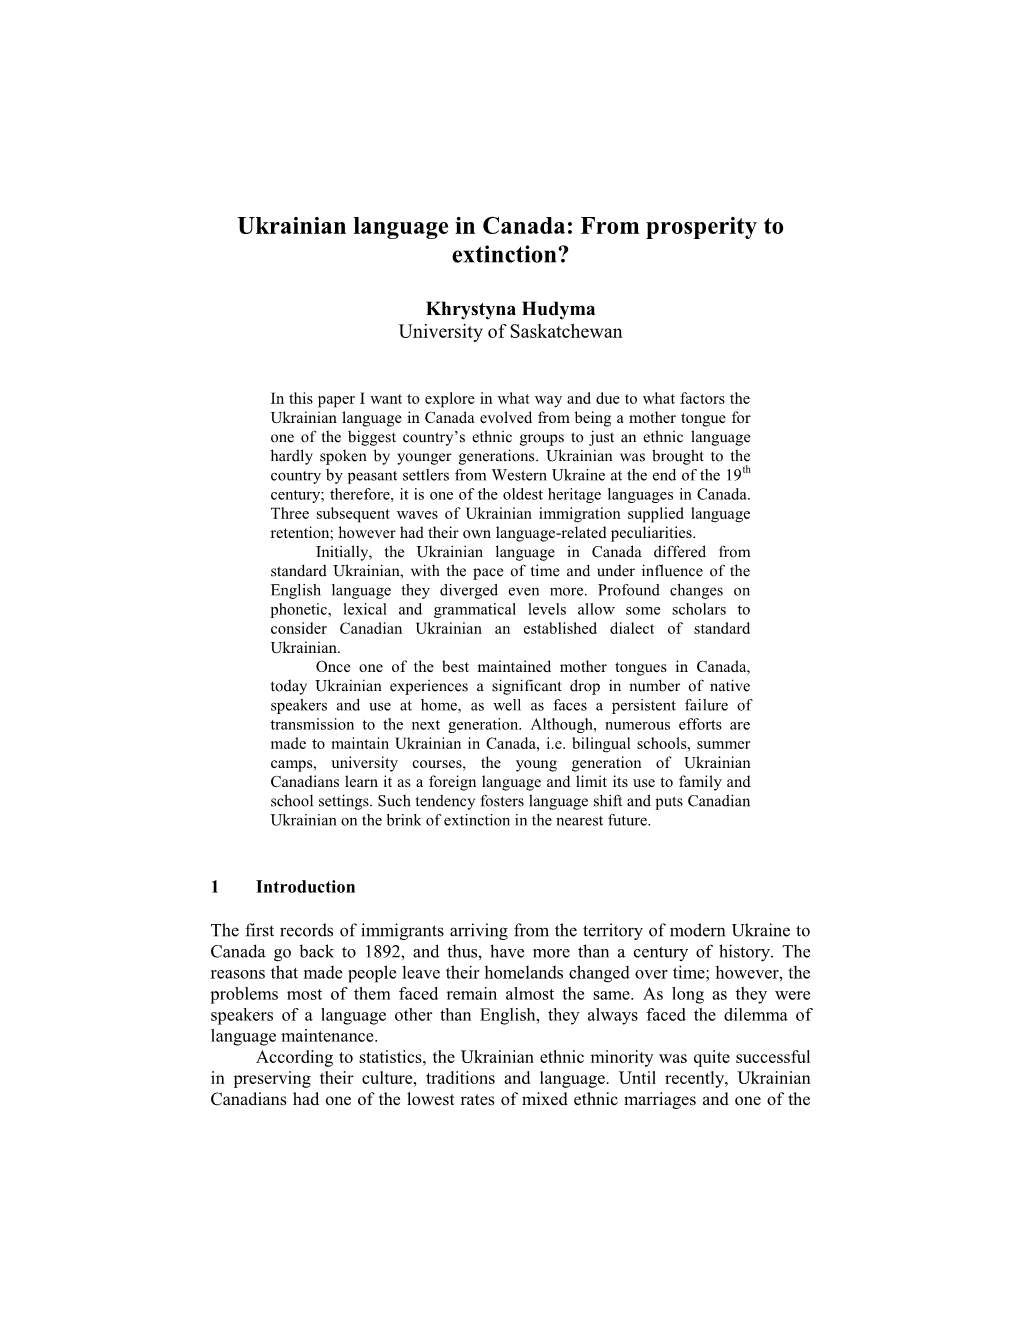 Ukrainian Language in Canada: from Prosperity to Extinction?